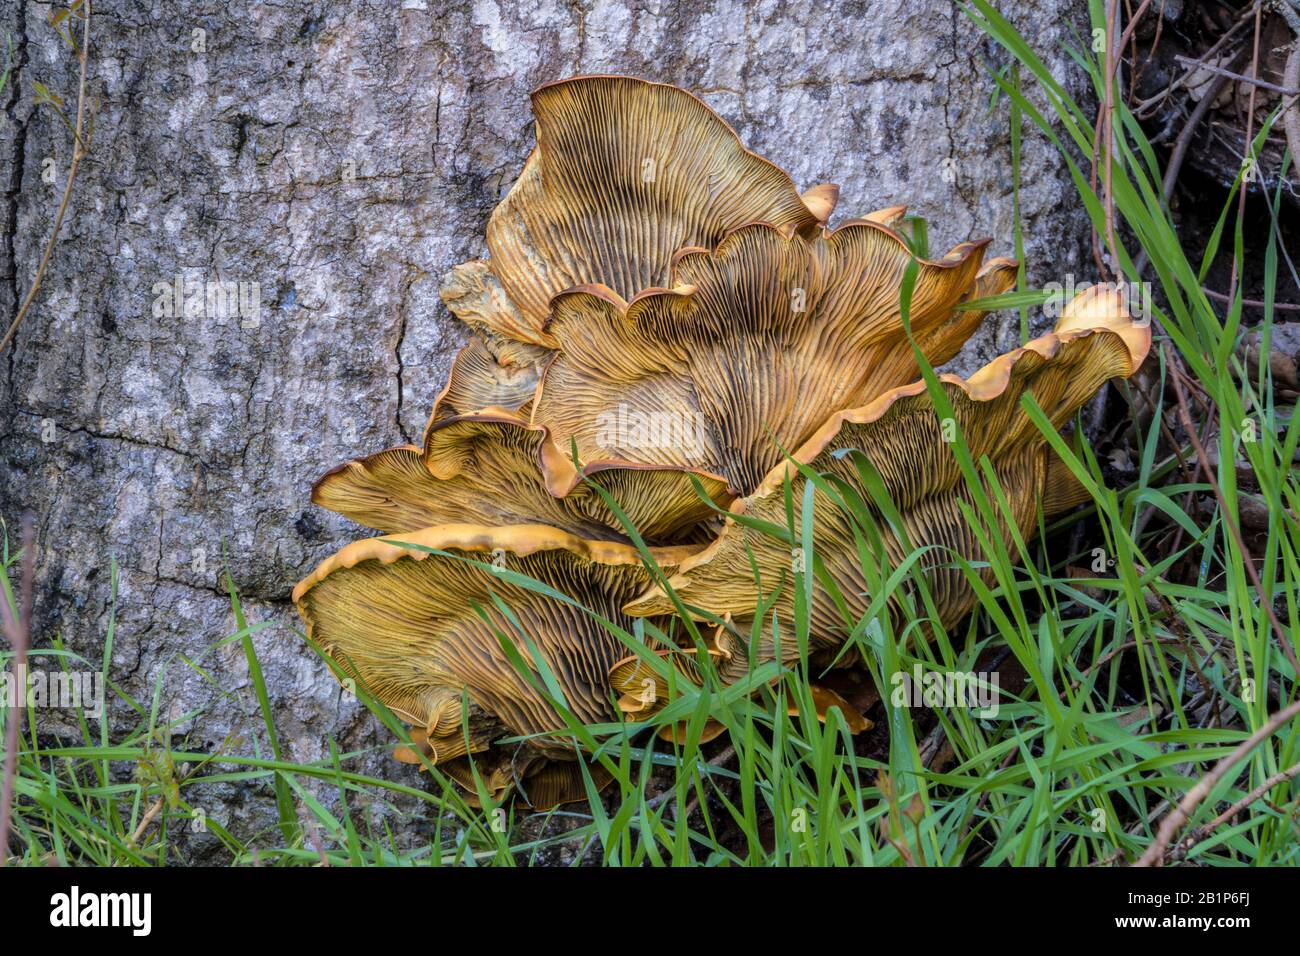 fungus growing on dead tree Stock Photo